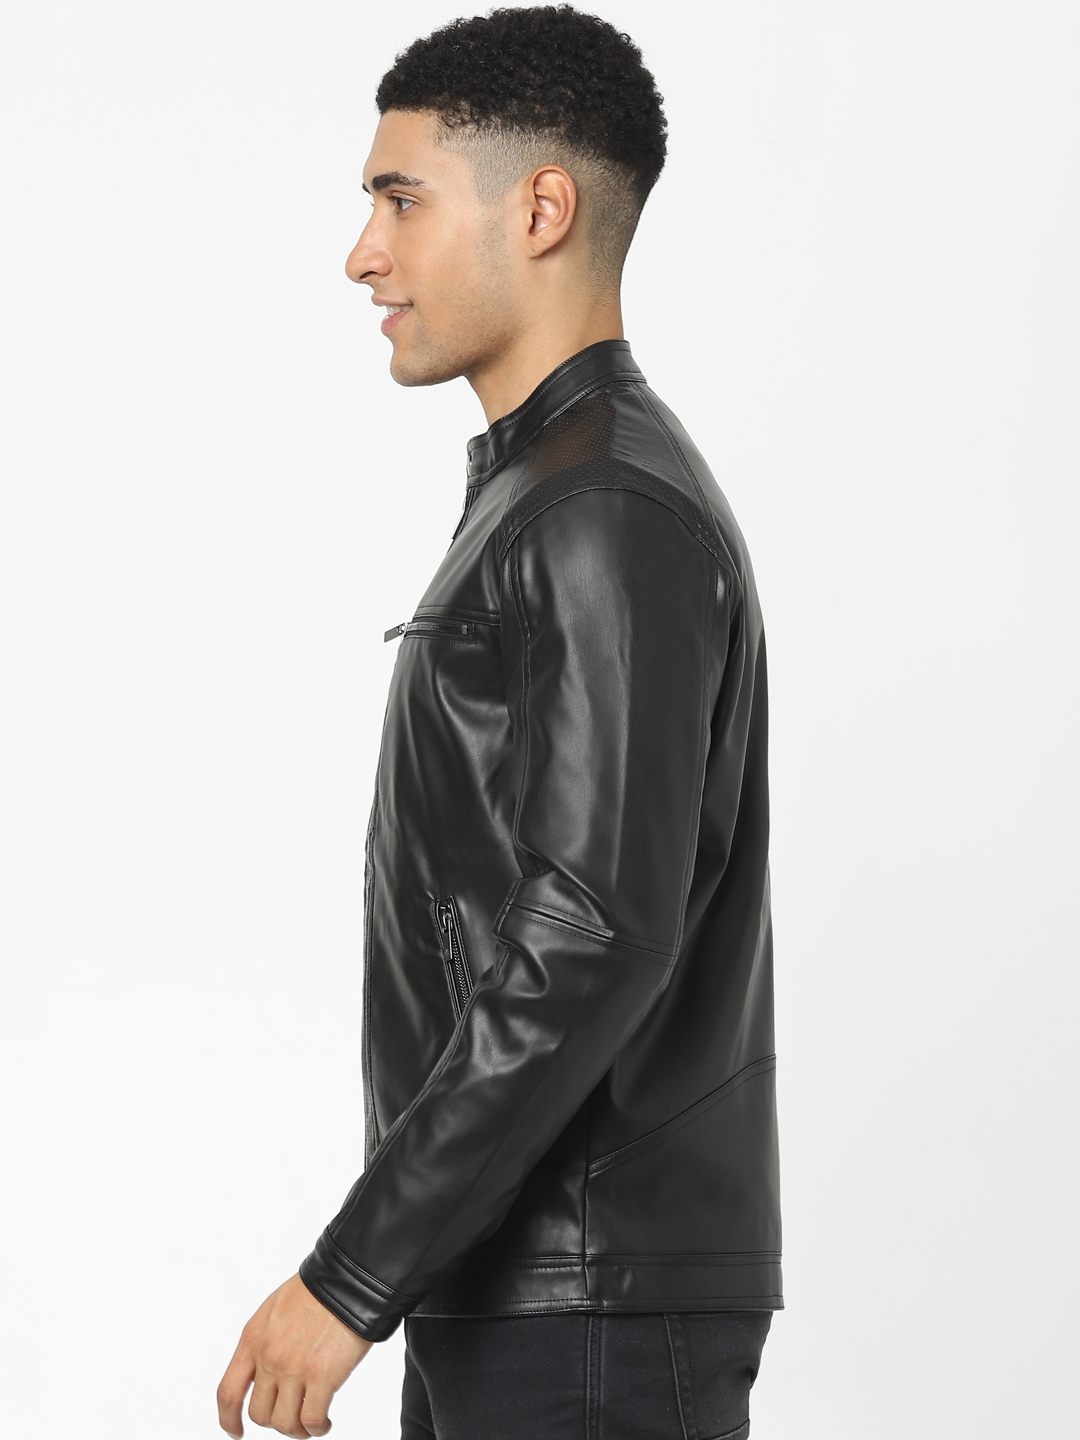 Men's Black Solid Leather Jackets